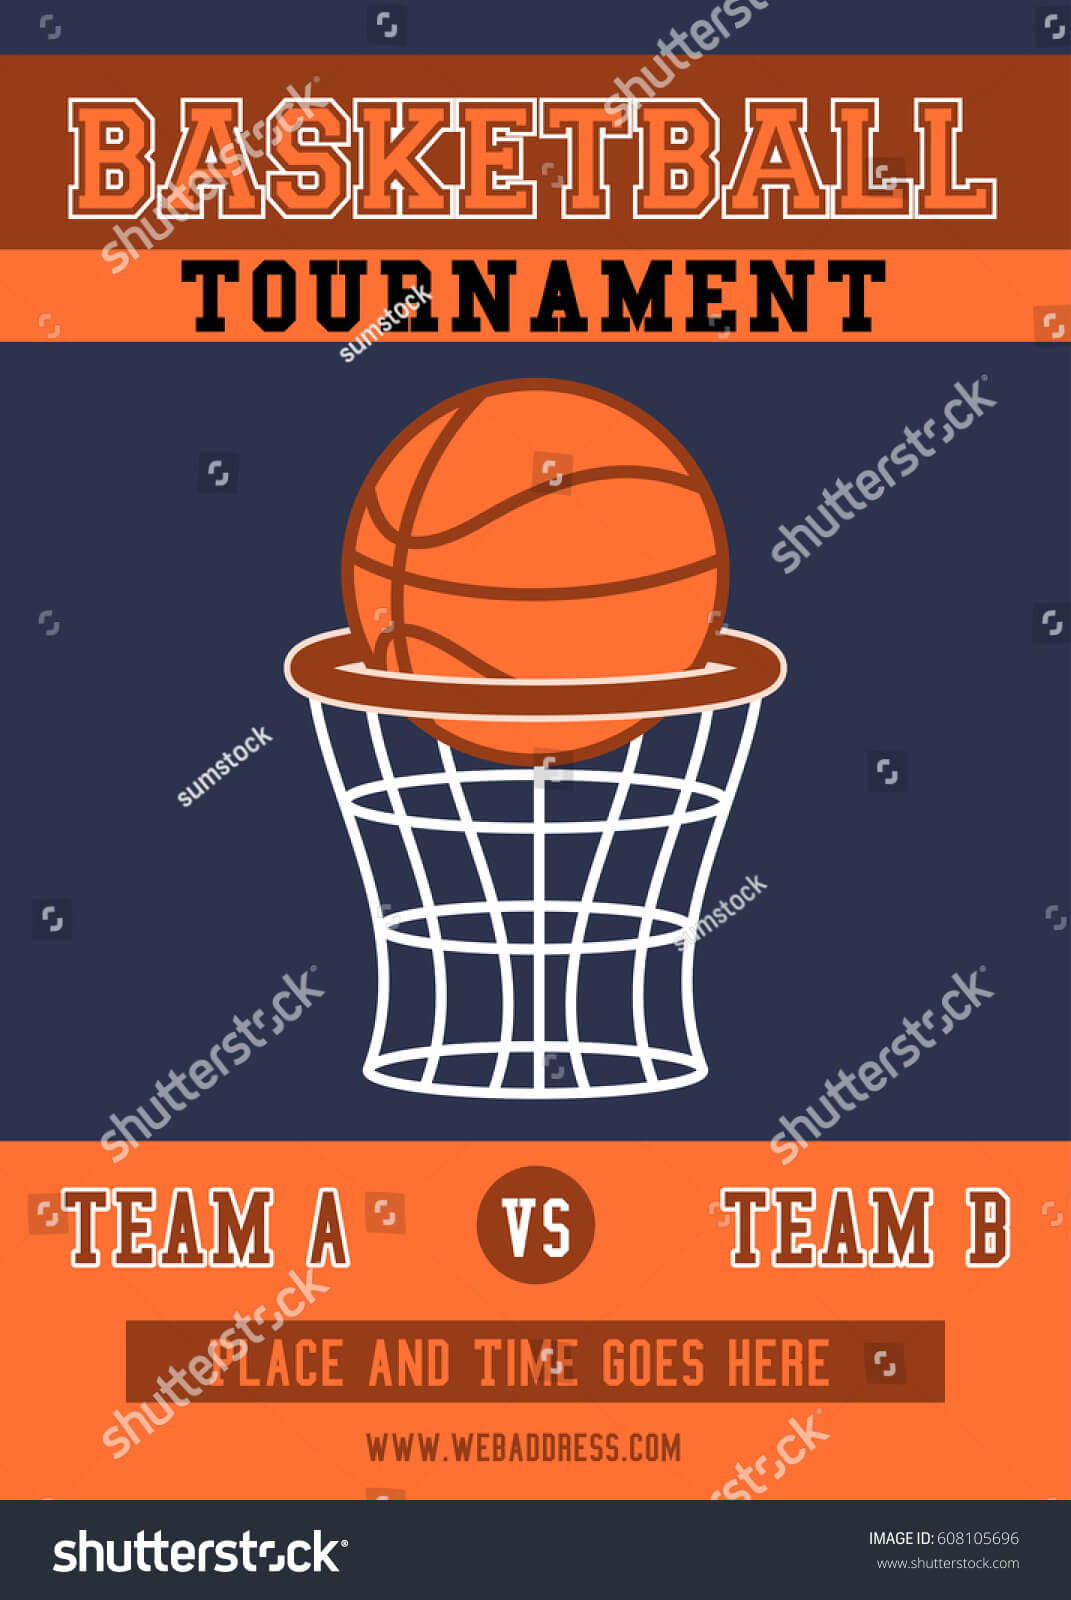 Basketball Tournament Flyer Poster Template Stock Vector With Basketball Tournament Flyer Template